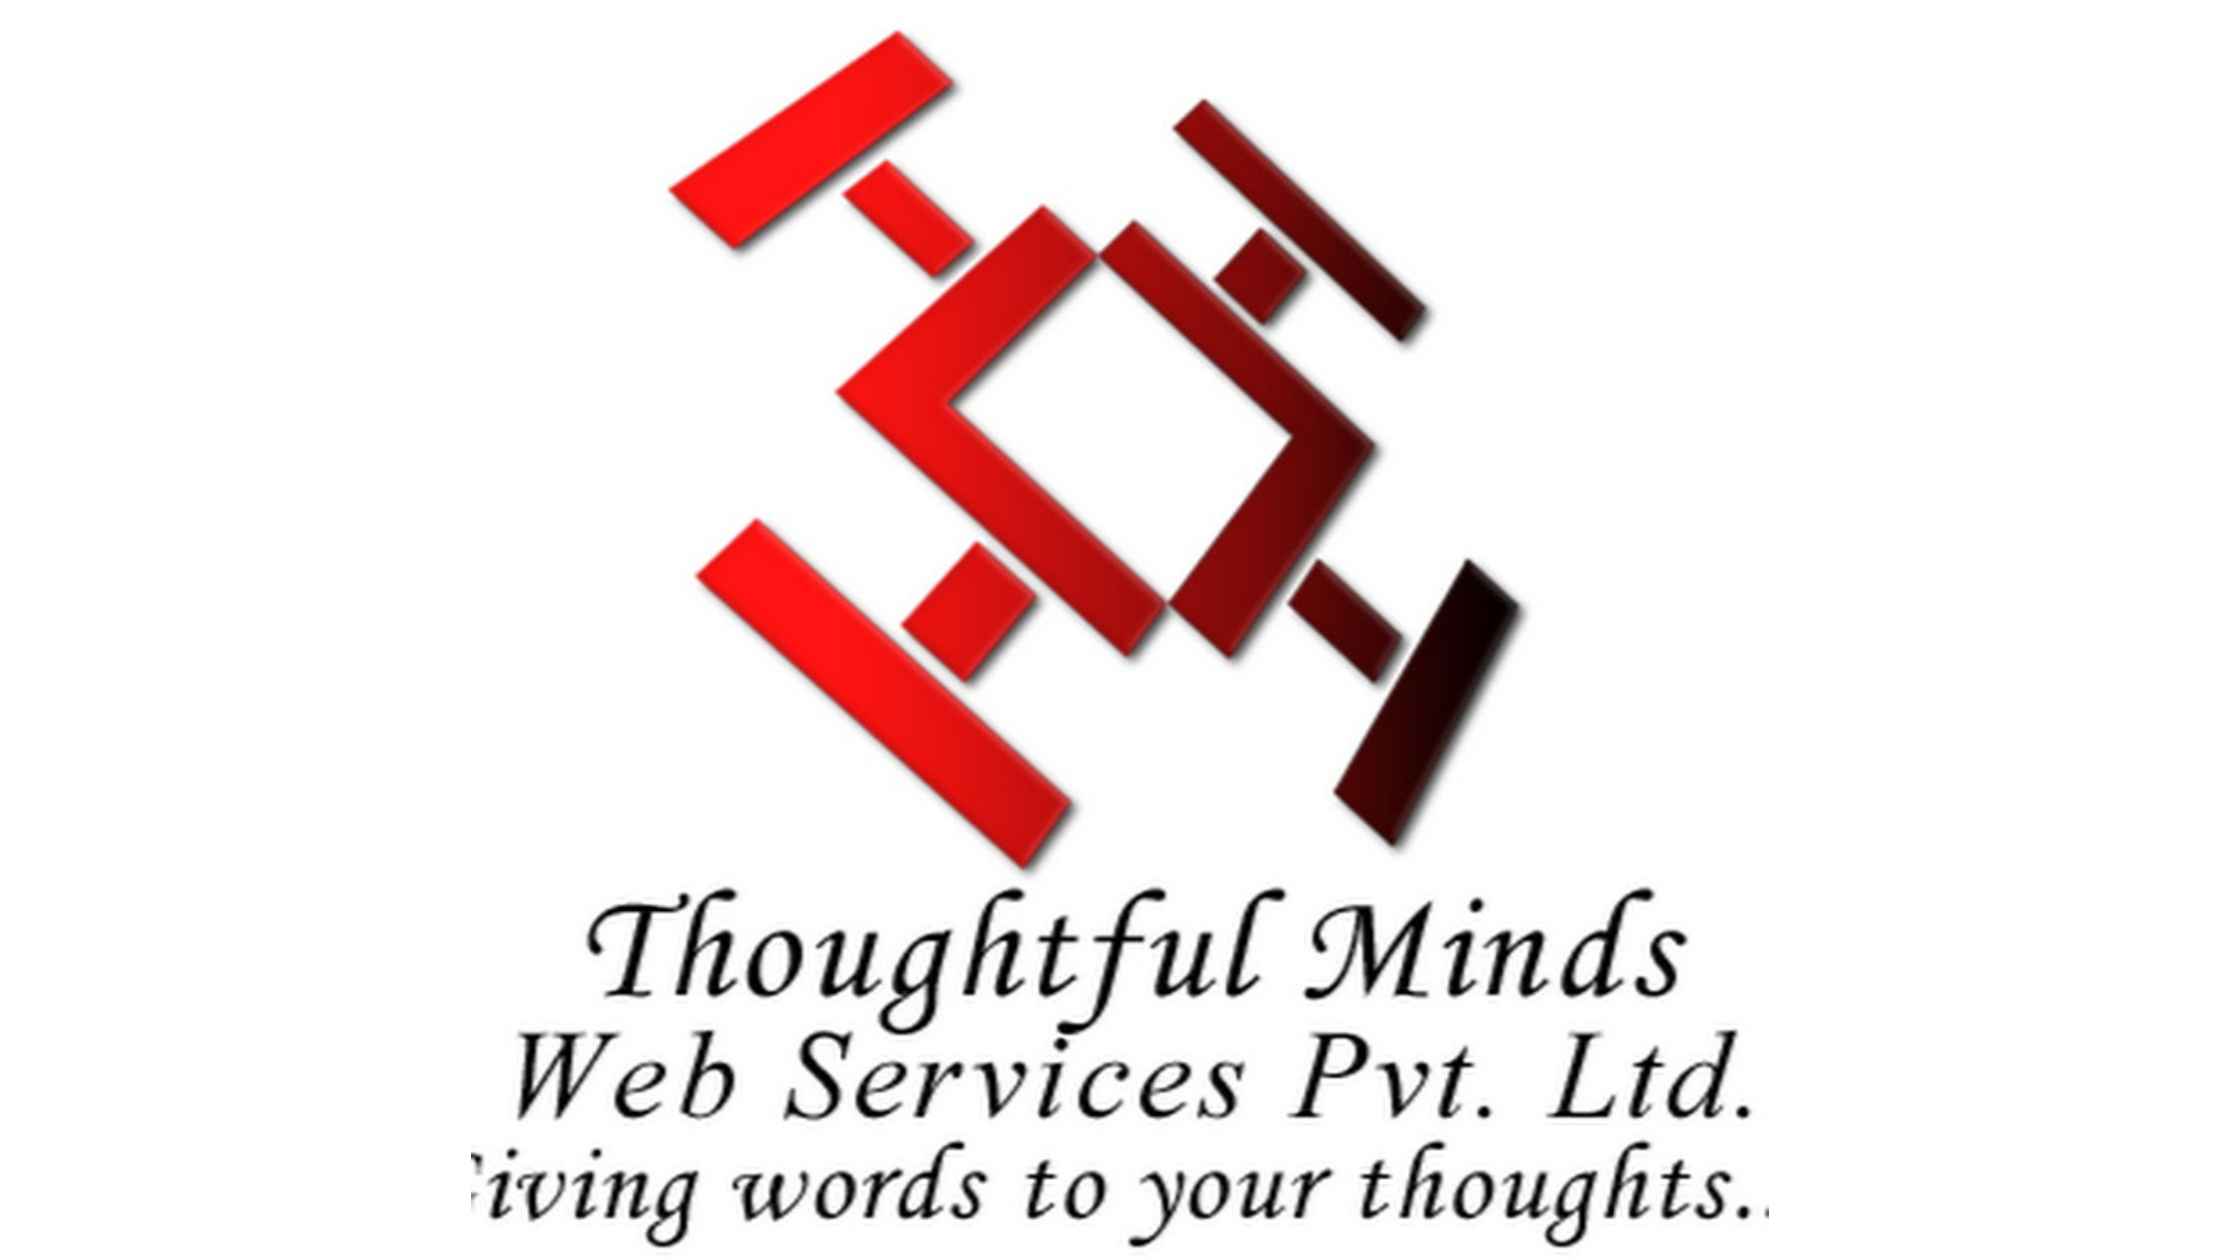 Thoughtful Minds Web Services Pvt. Ltd